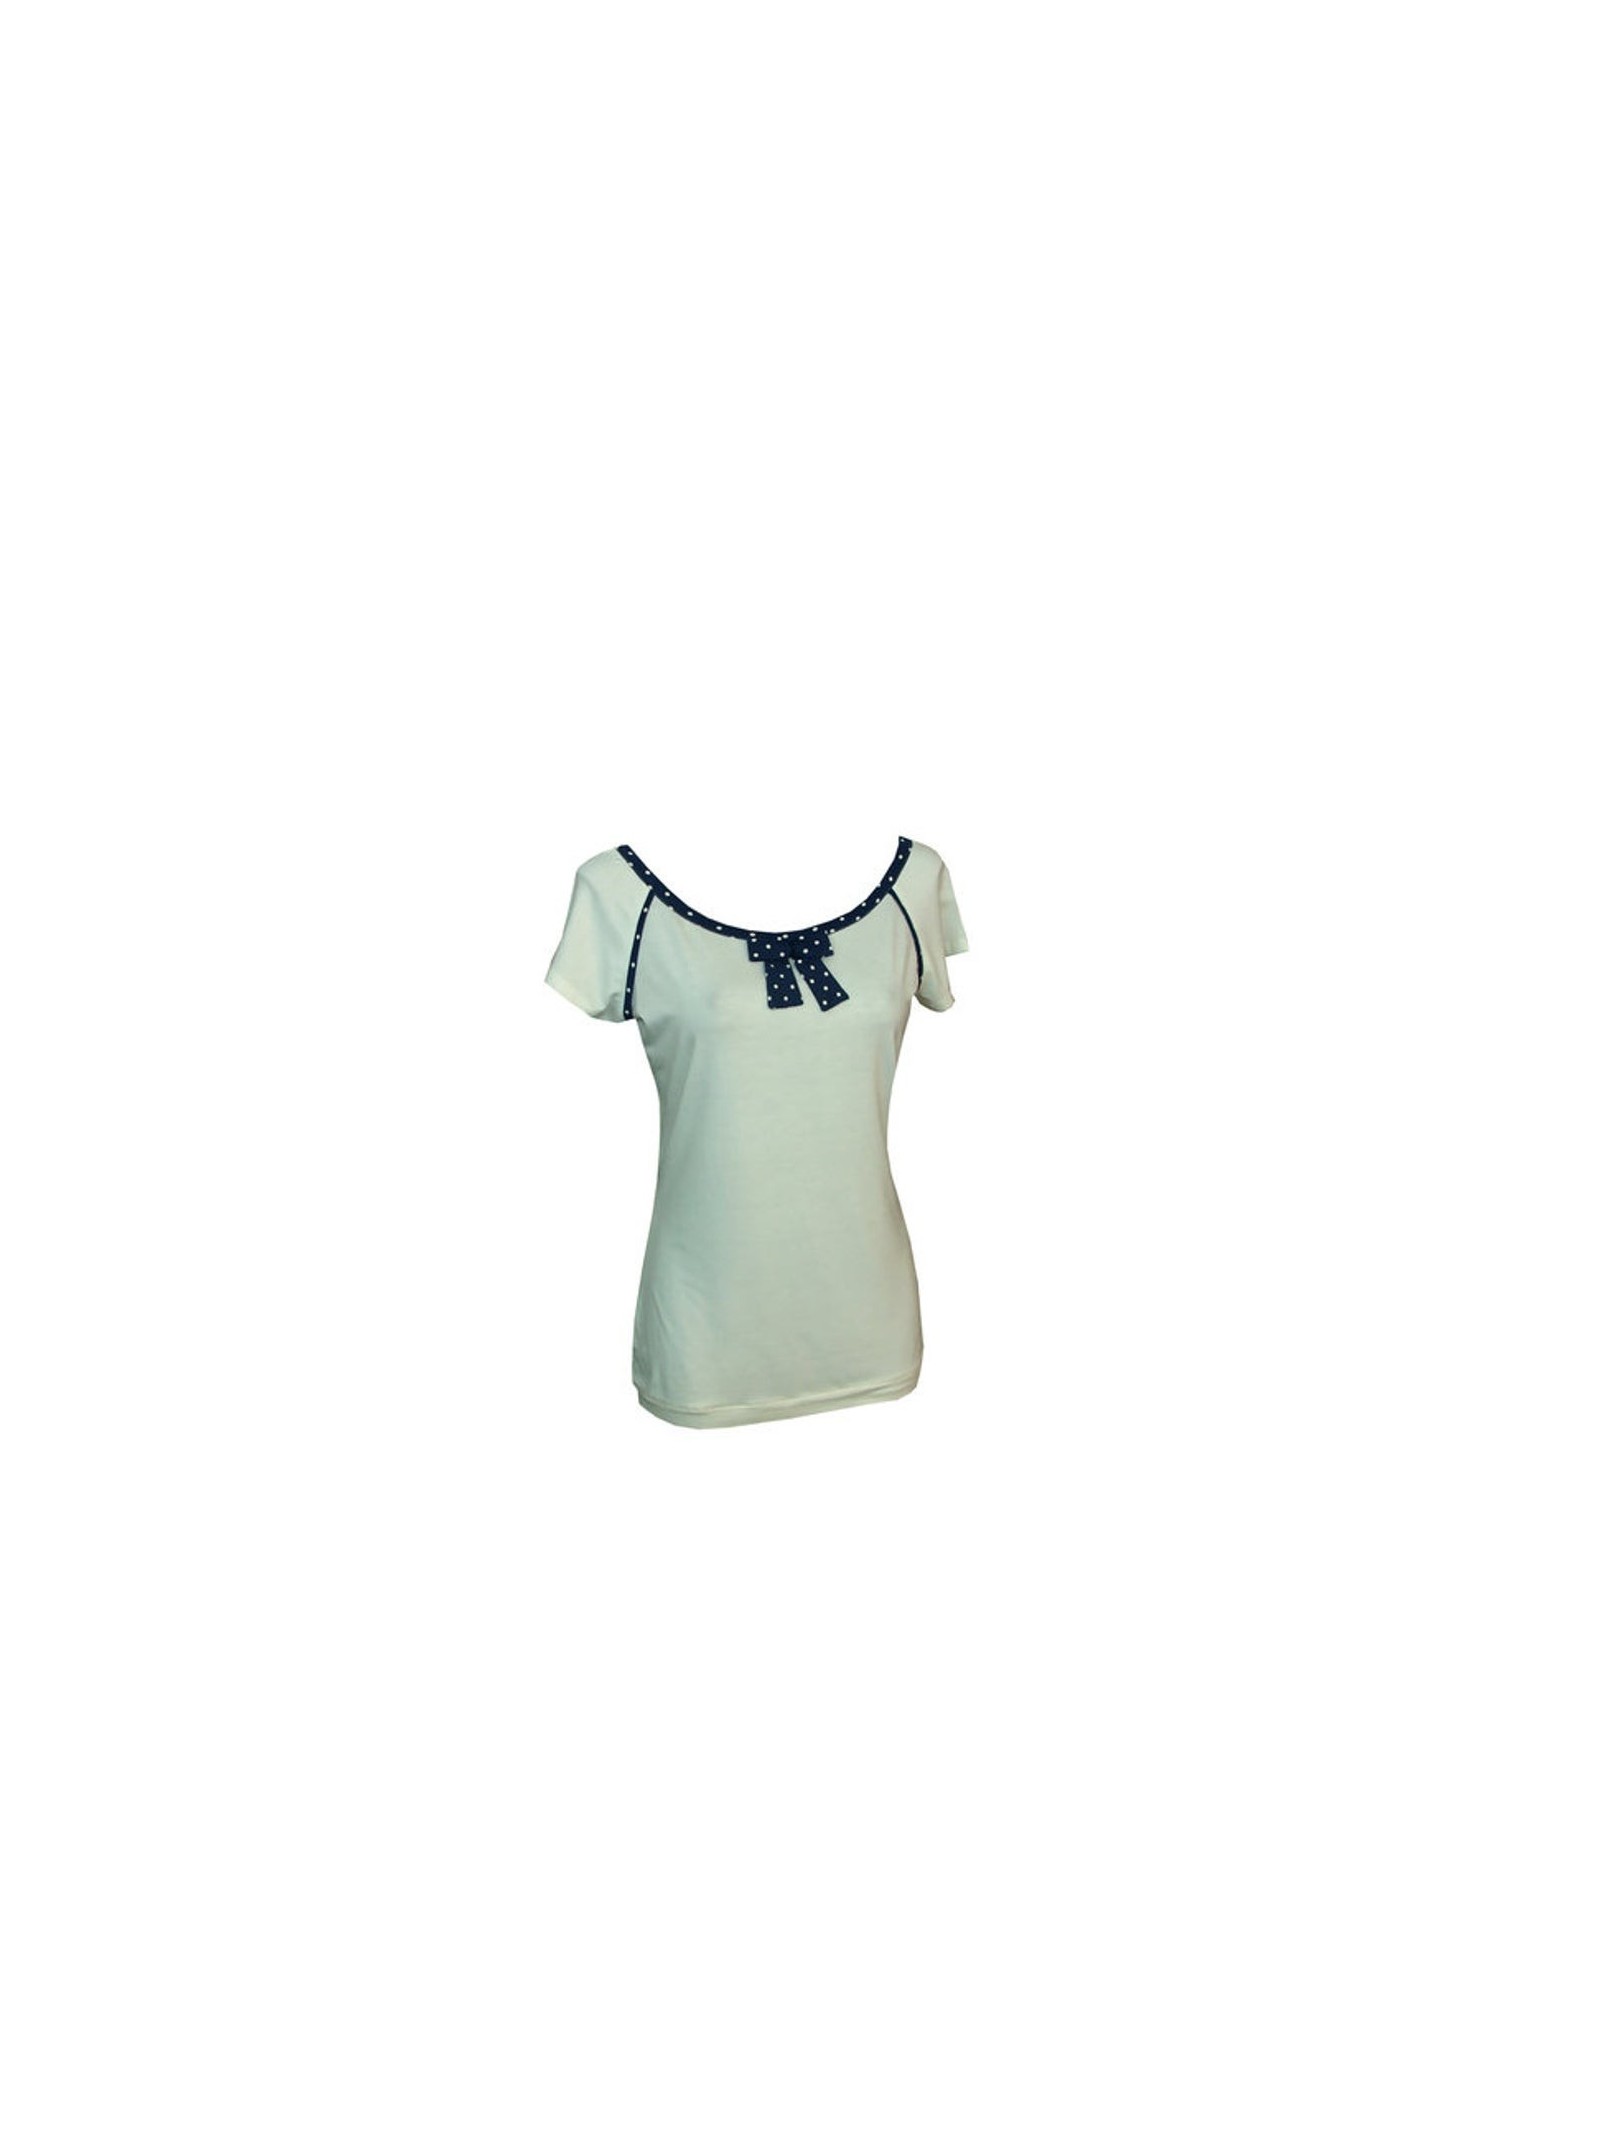 Iza Fabian - Shirt - DOTS 1 - weiß white punkte women damen blau blue bluse blouse